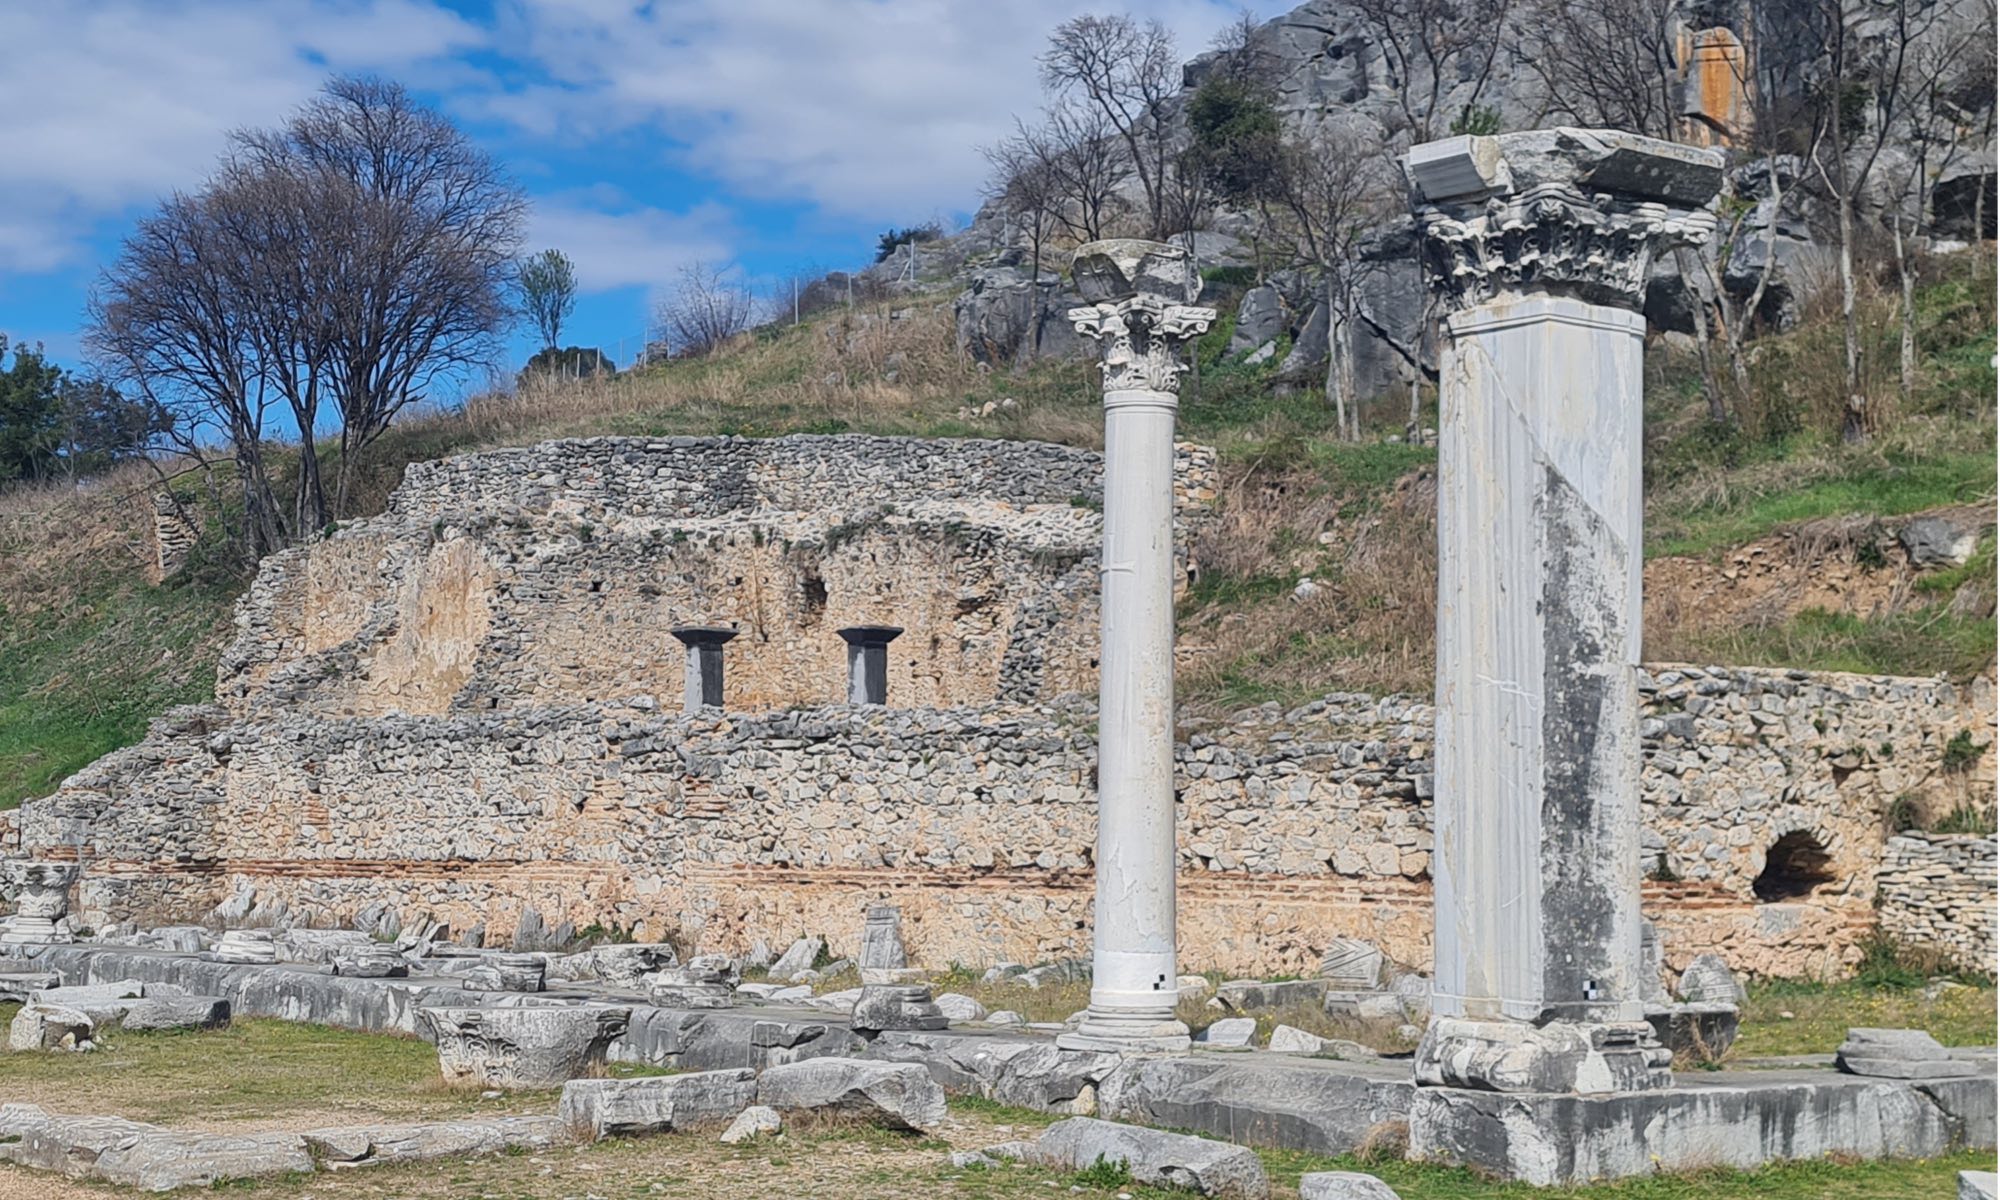 Travel through history at Philippi